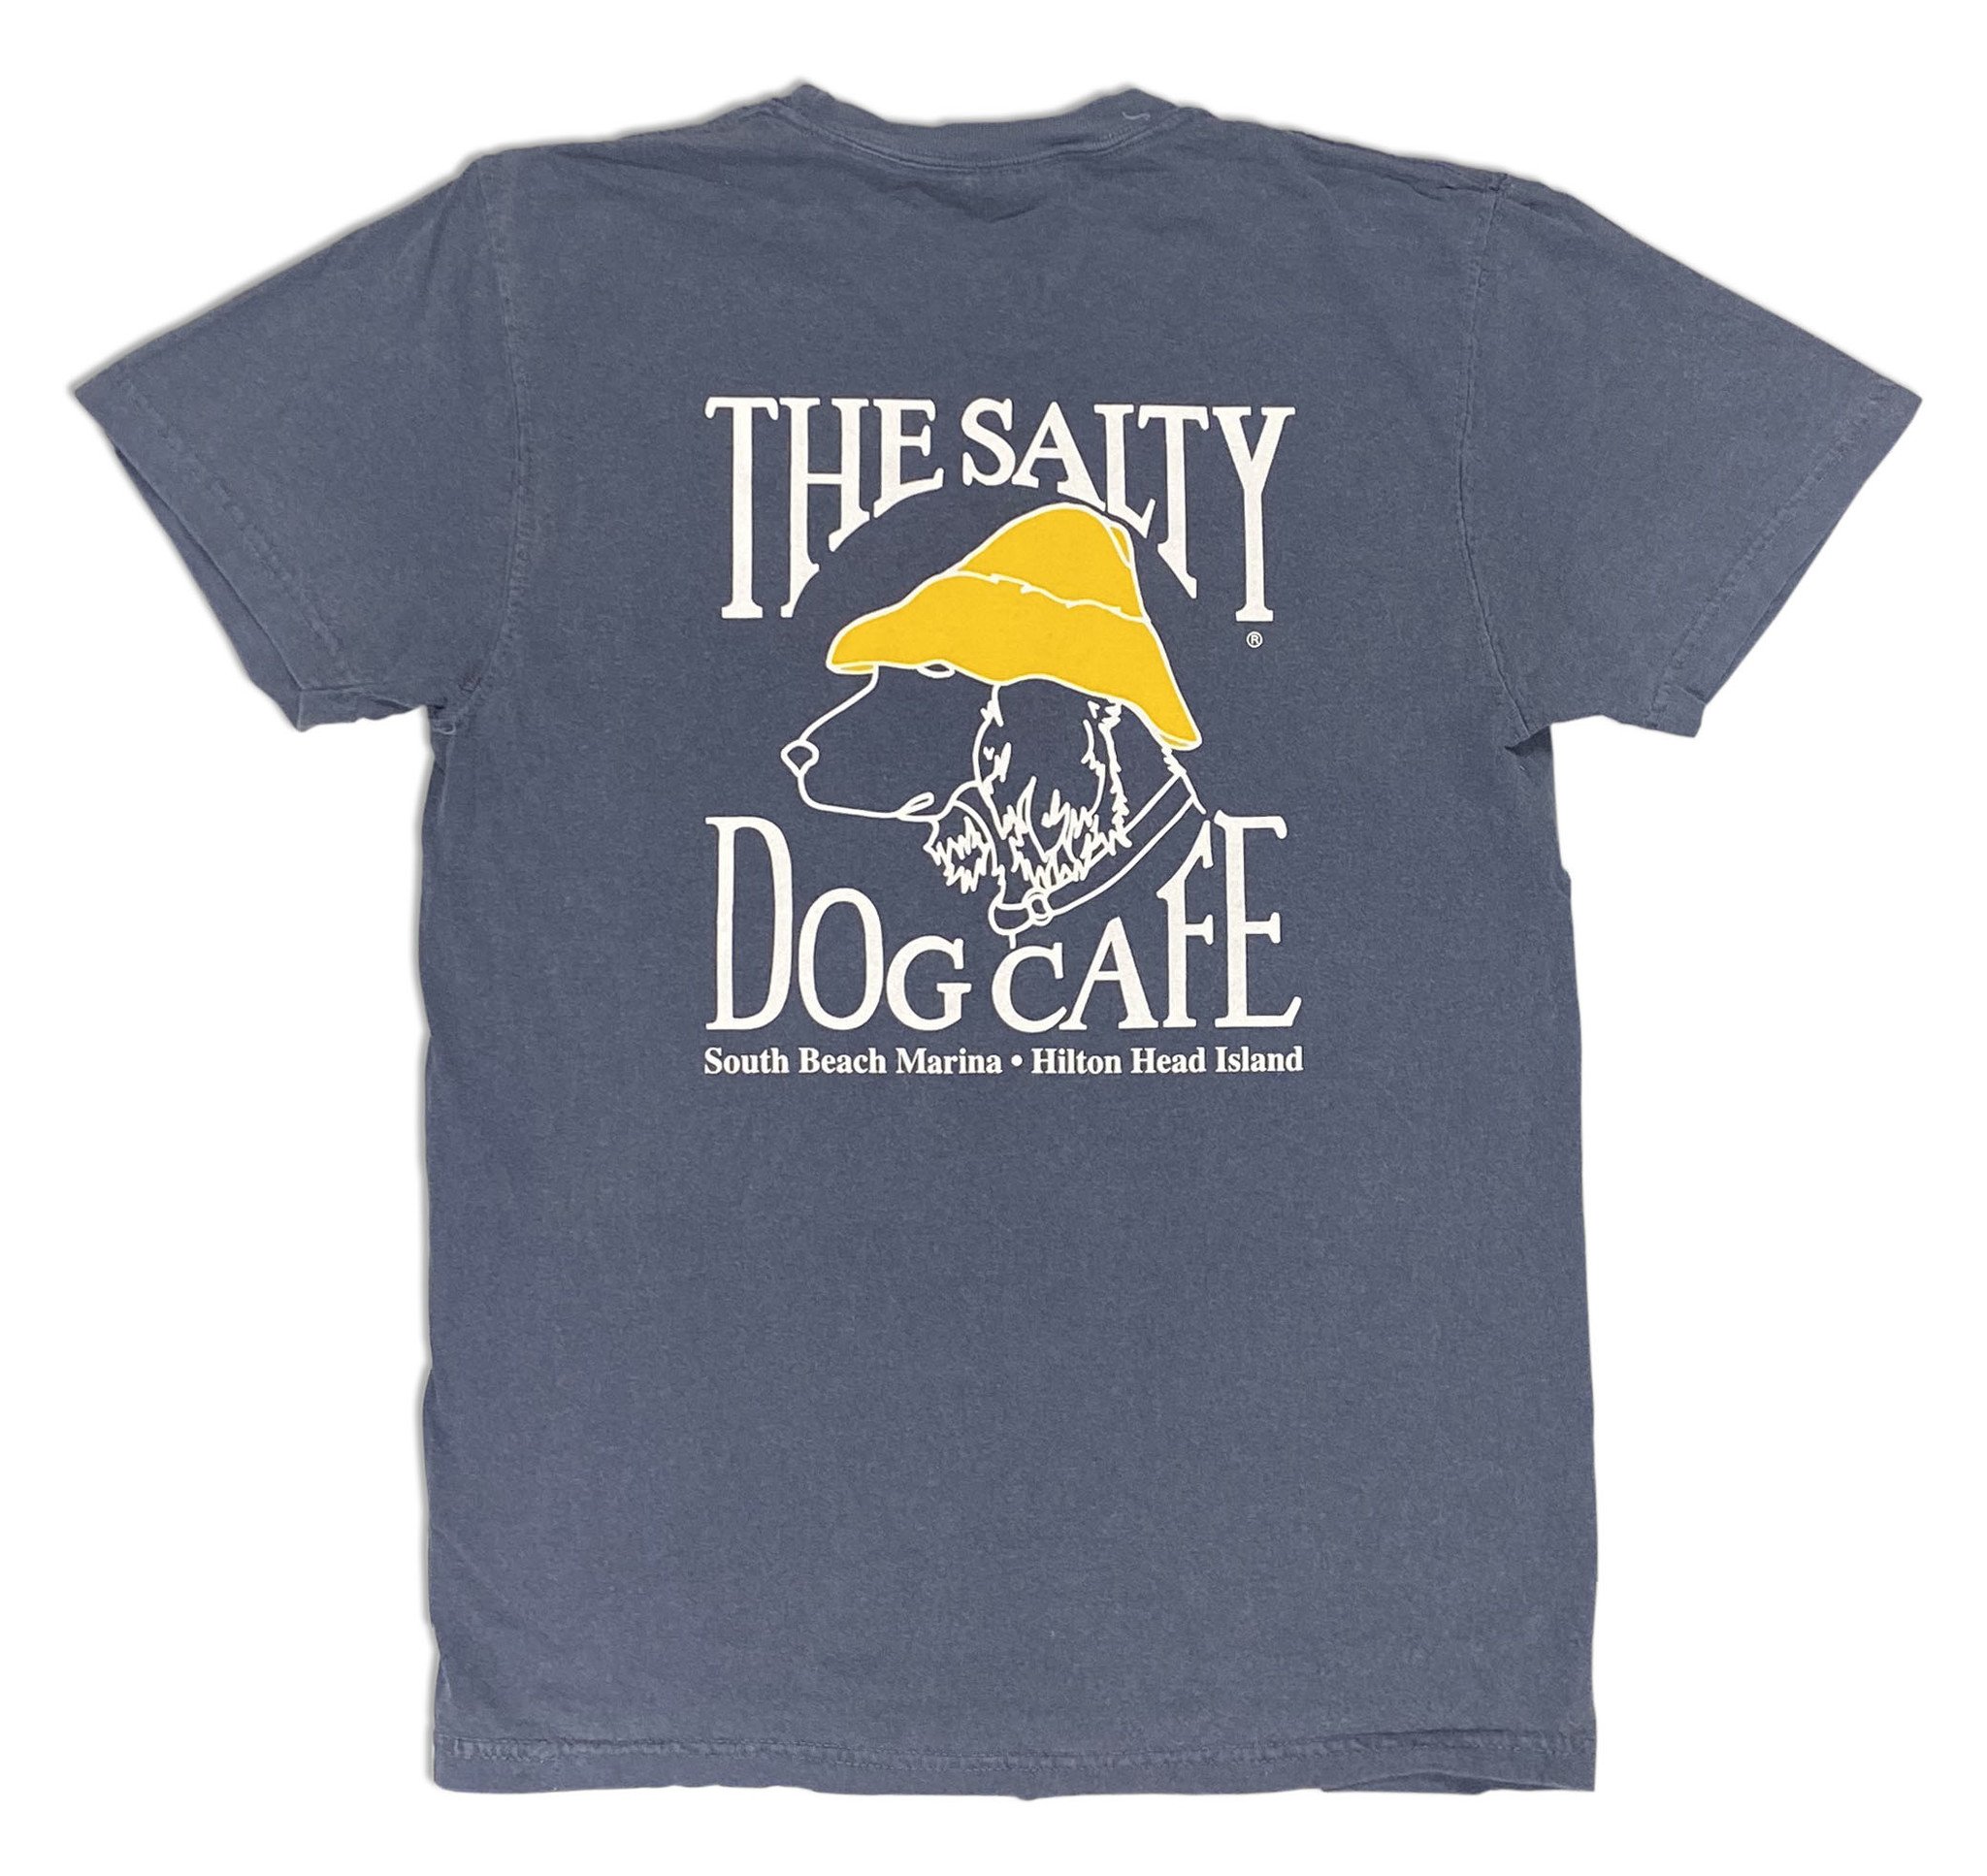 Comfort Soft S/S Navy - Salty Dog T-Shirt Factory